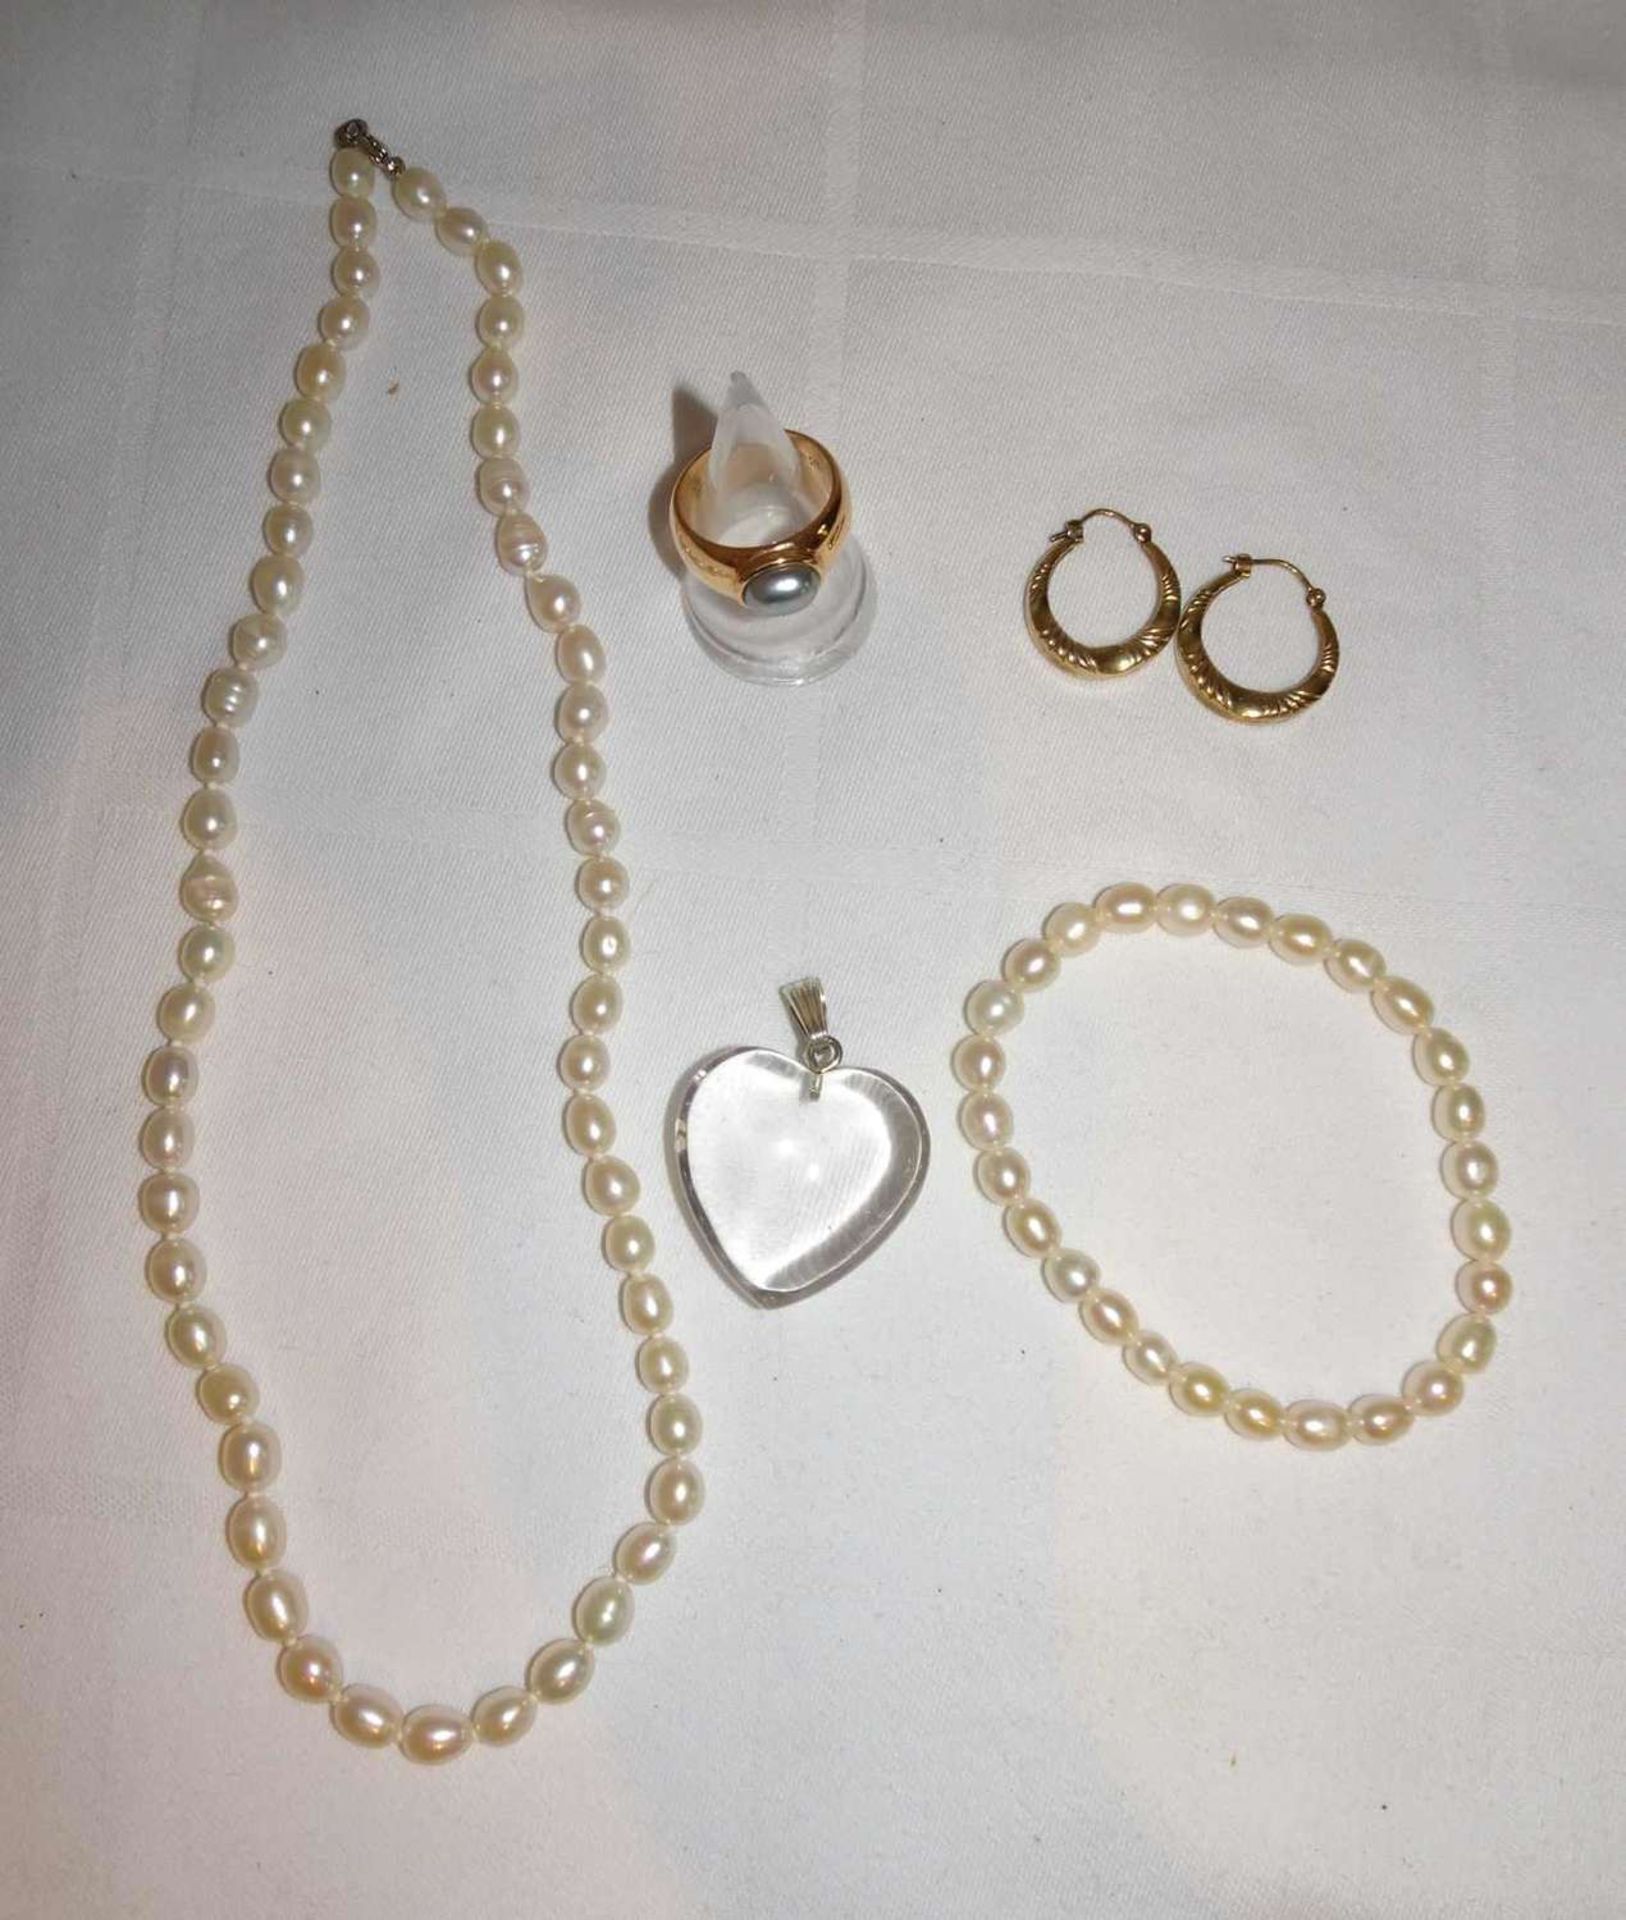 Lot Silber und Perlenschmuck, dabei 1 Perlenketten, 1 Perlenarmband, 1 Paar Creolen vergoldet, 1